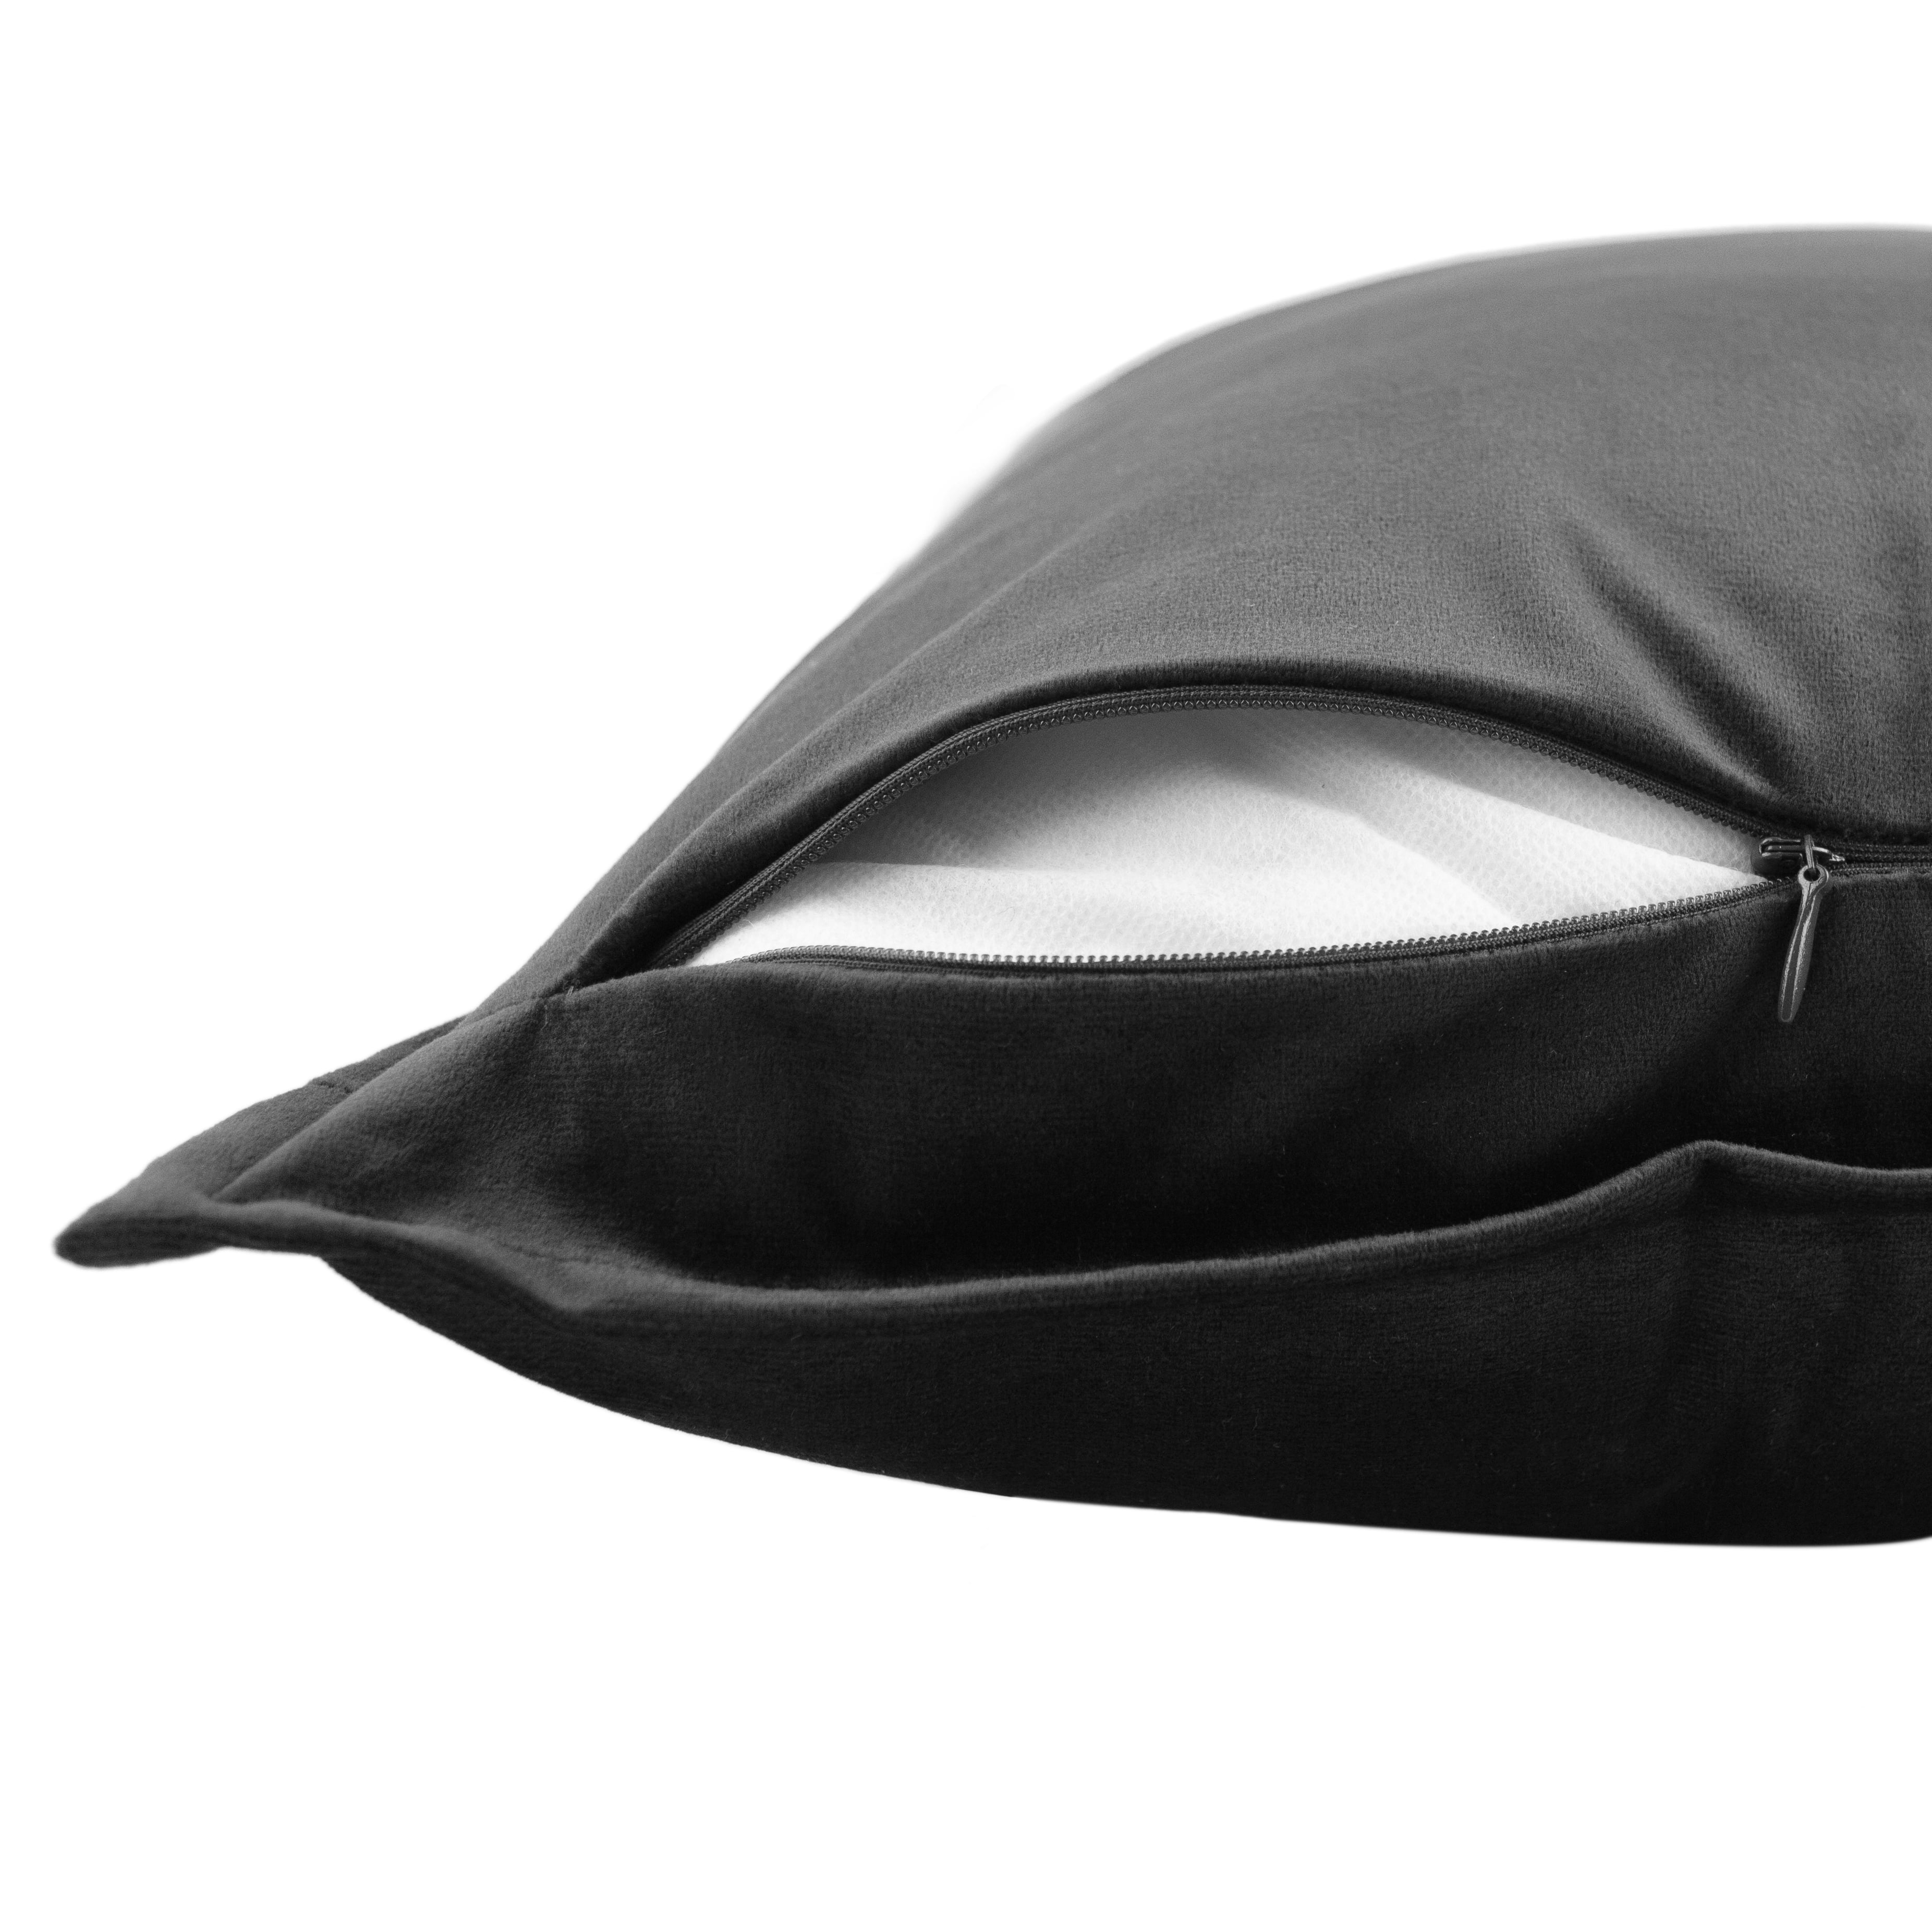 Premium 18″ Pillow – Patent No. 2,601,819 – Wigwam Village No. 2